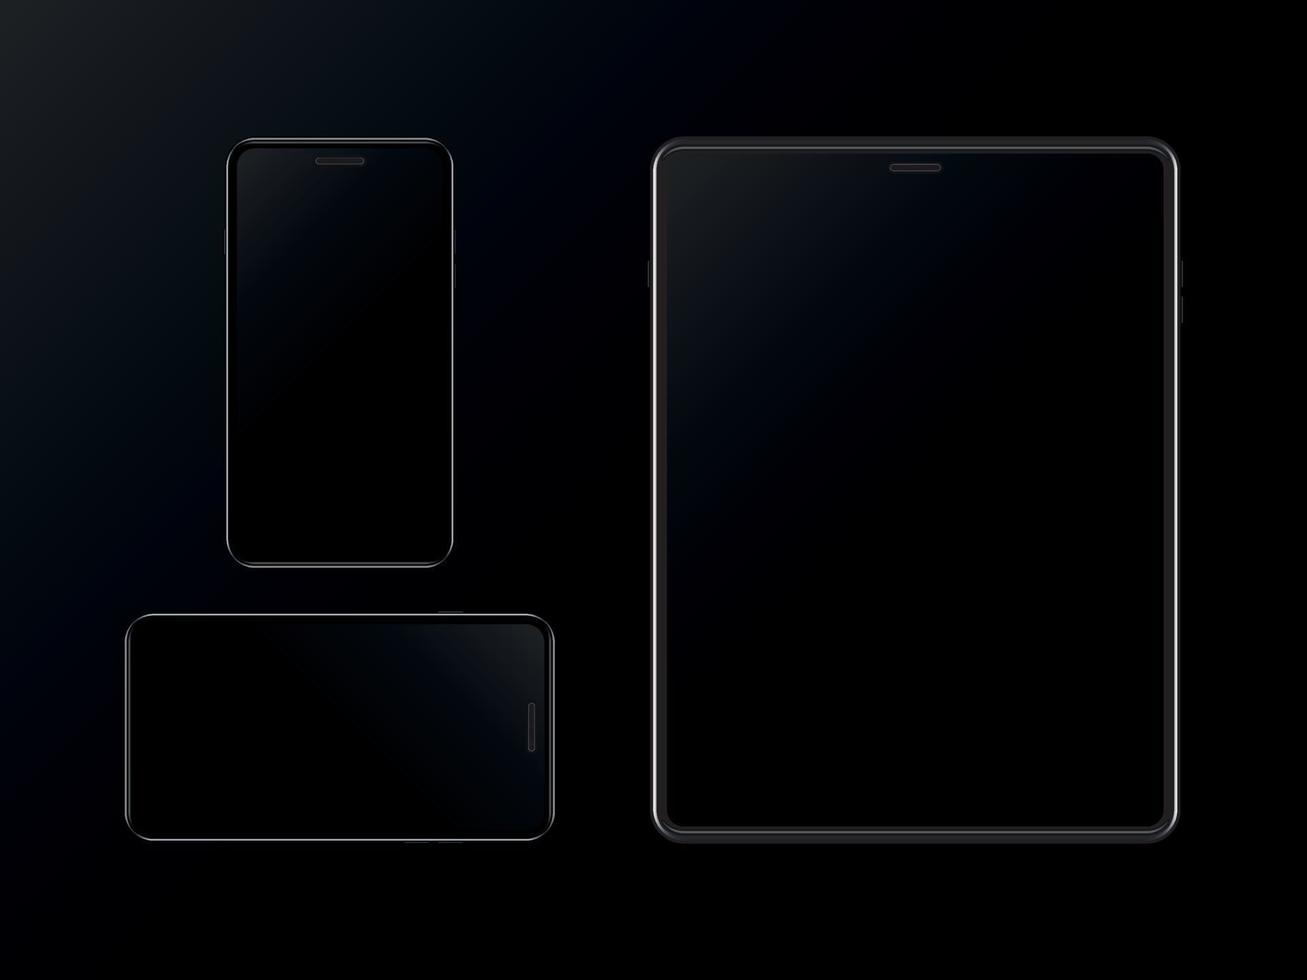 Set of black smartphone and tablet on black background. Template modern design of gadgets. Mobile phone and tablet mockup. Vector